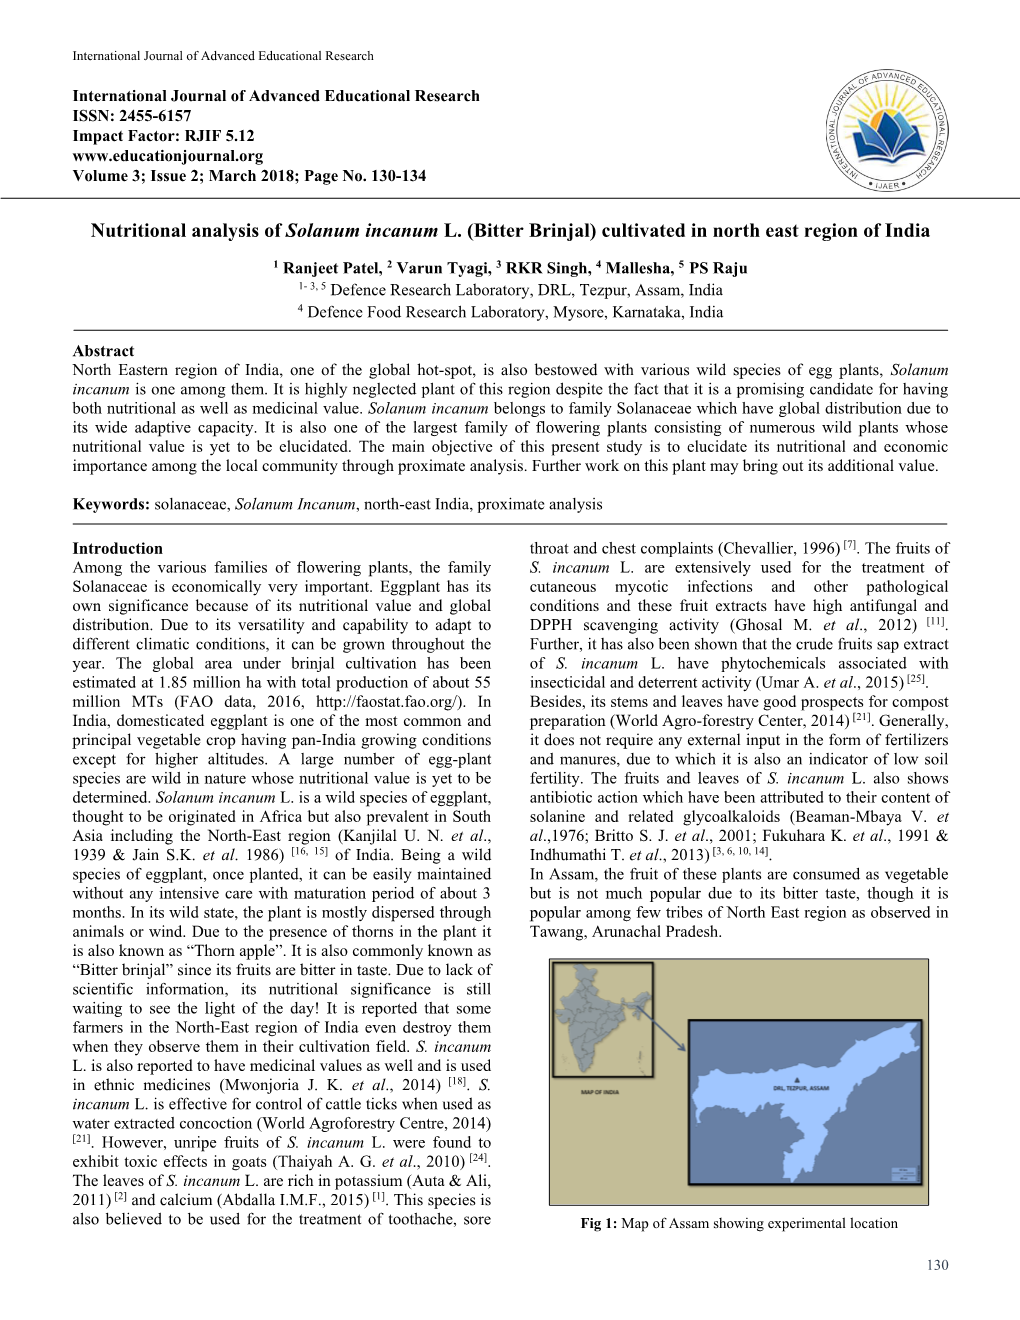 Nutritional Analysis of Solanum Incanum L. (Bitter Brinjal) Cultivated in North East Region of India